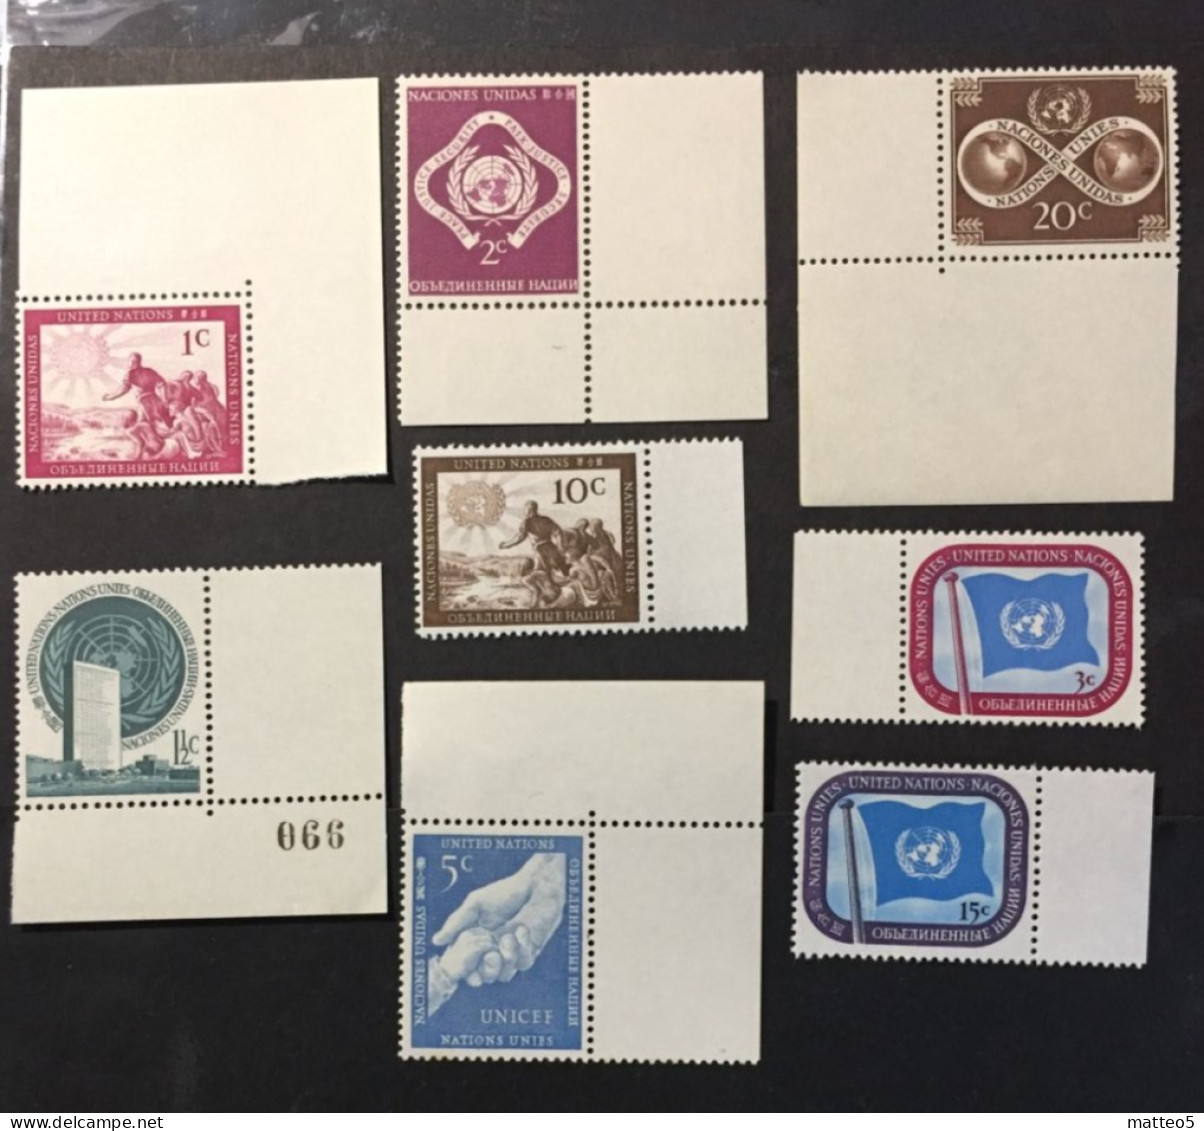 1951 - United Nations UNO UN ONU - 8 Stamps Of The Year 1951 -  Unused - Ungebraucht